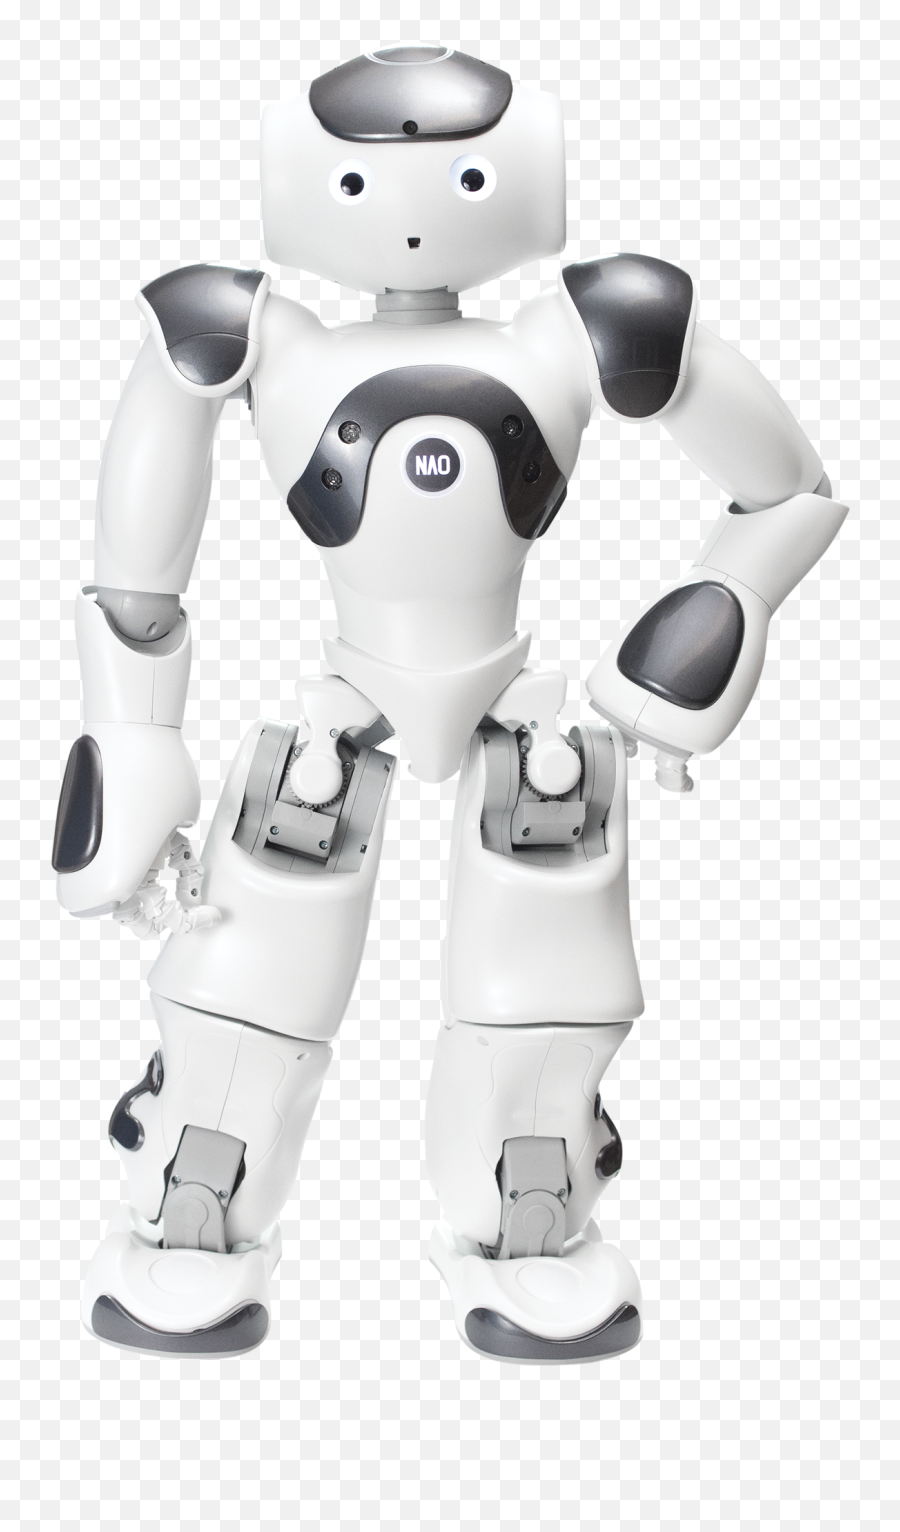 Robotic Systems - Netscope Solutions Nao Softbank Robotics Emoji,Robot With Human Emotions